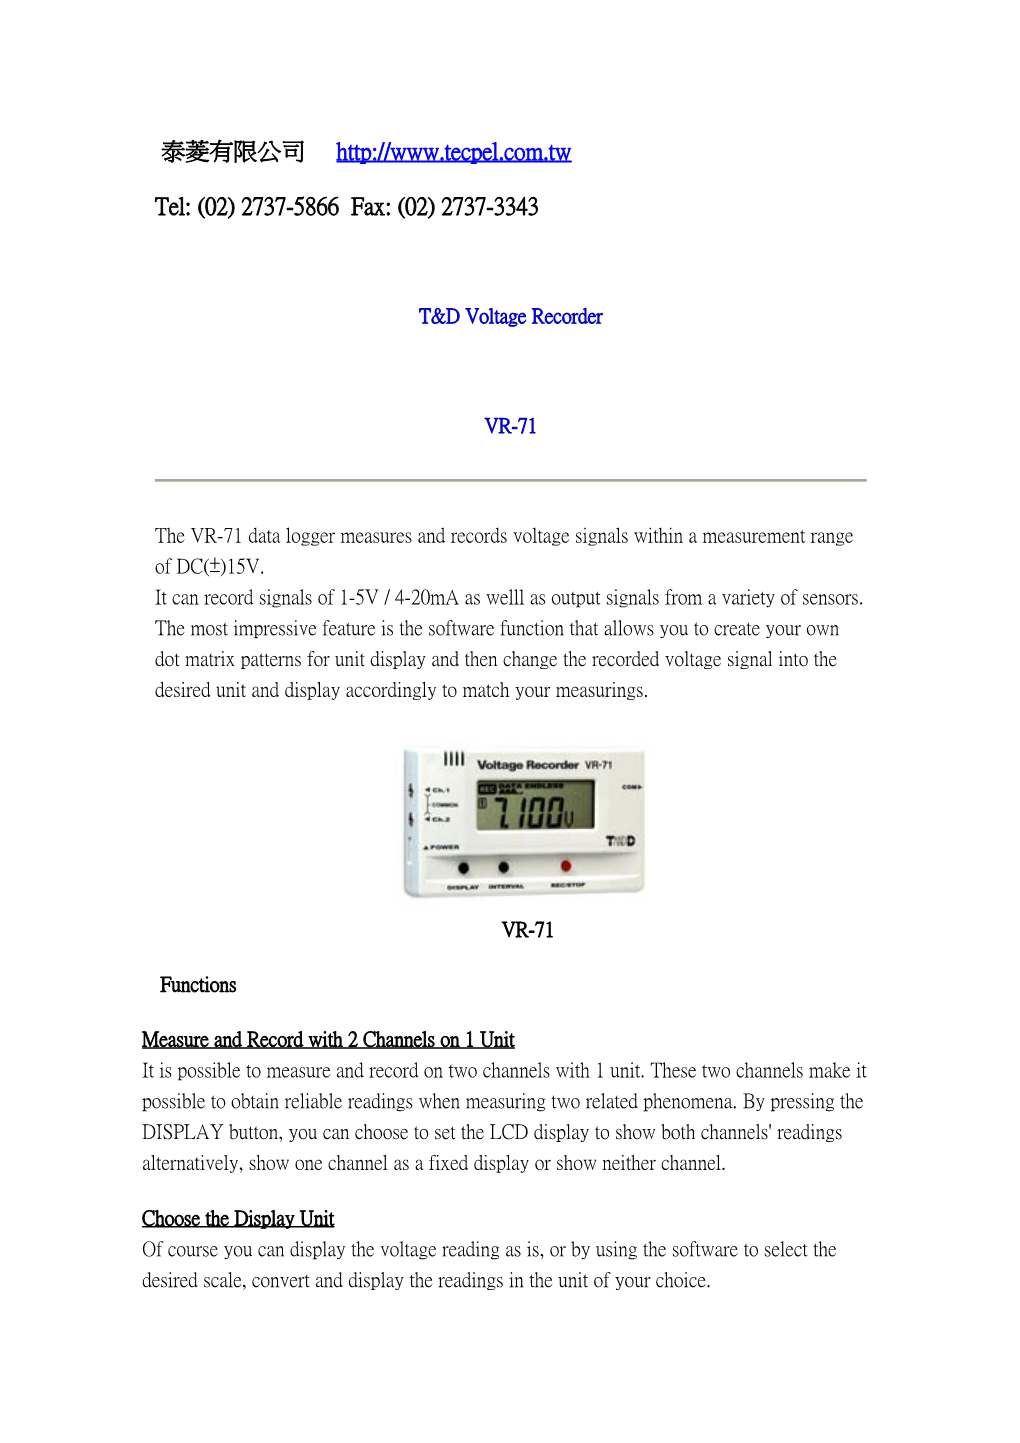 T&D Voltage Recorder